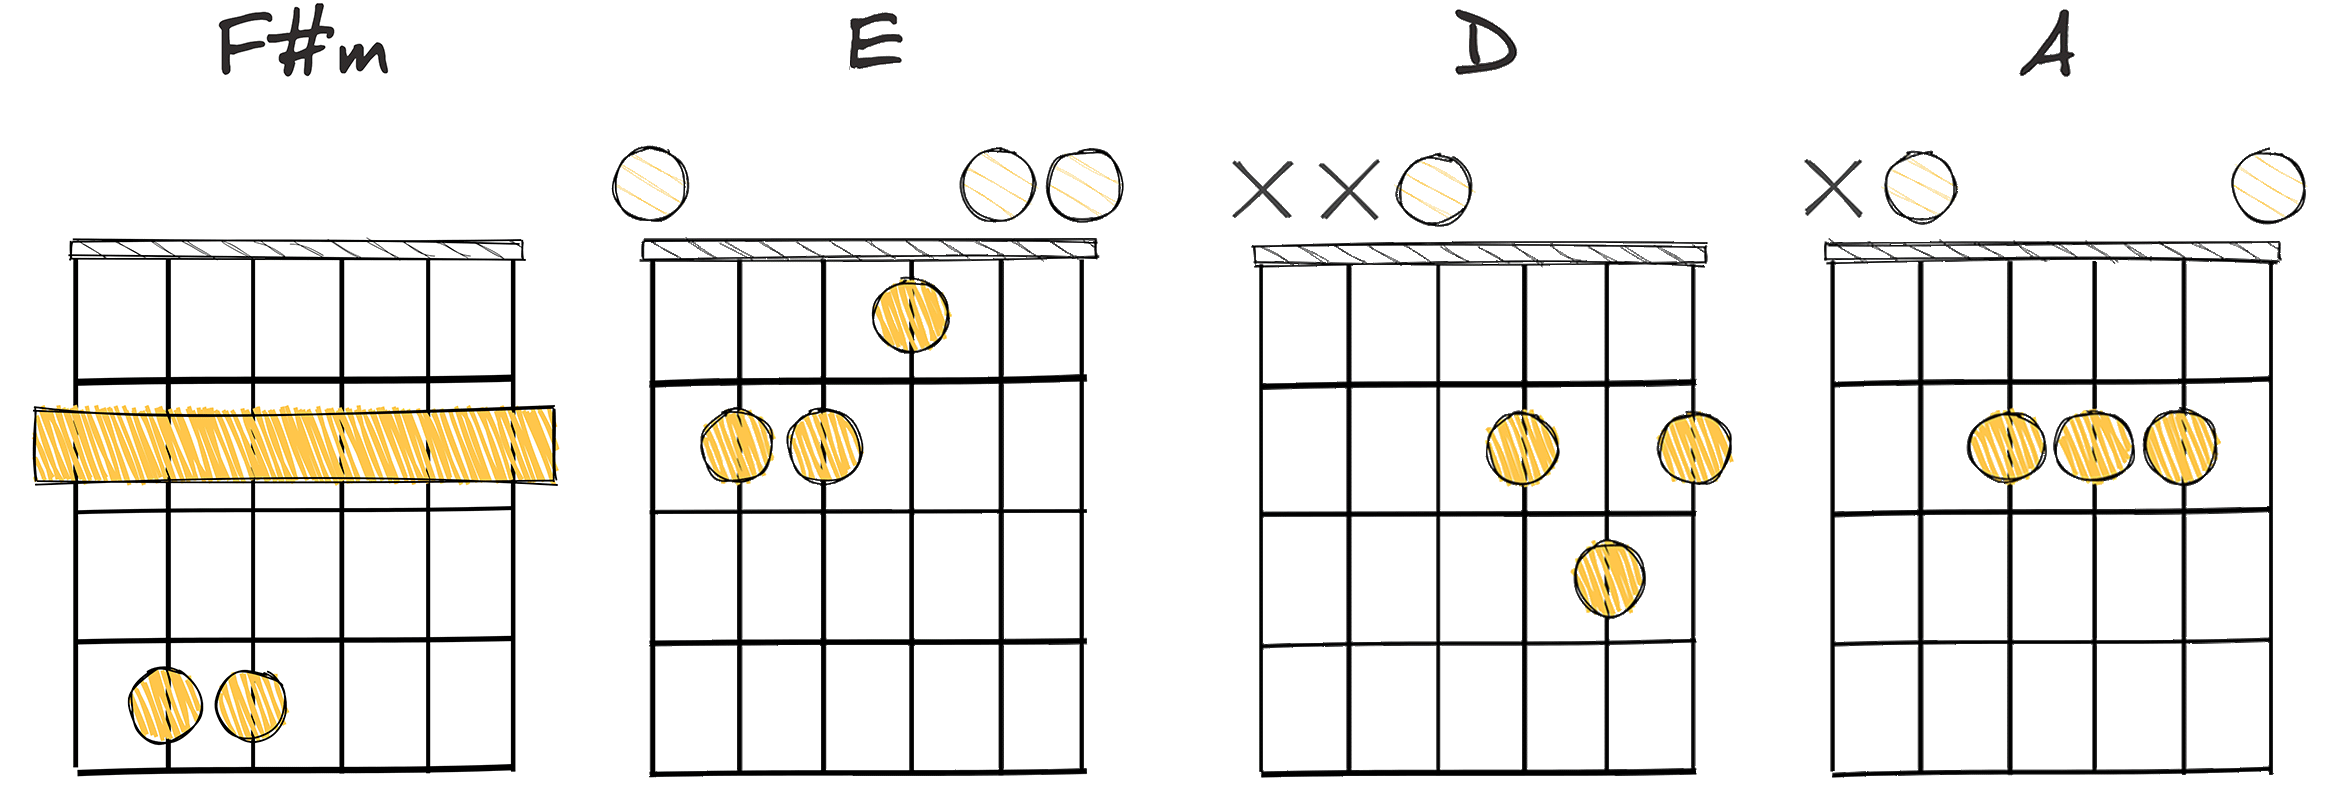 vi-V-IV-I (6-5-4-1) chords diagram